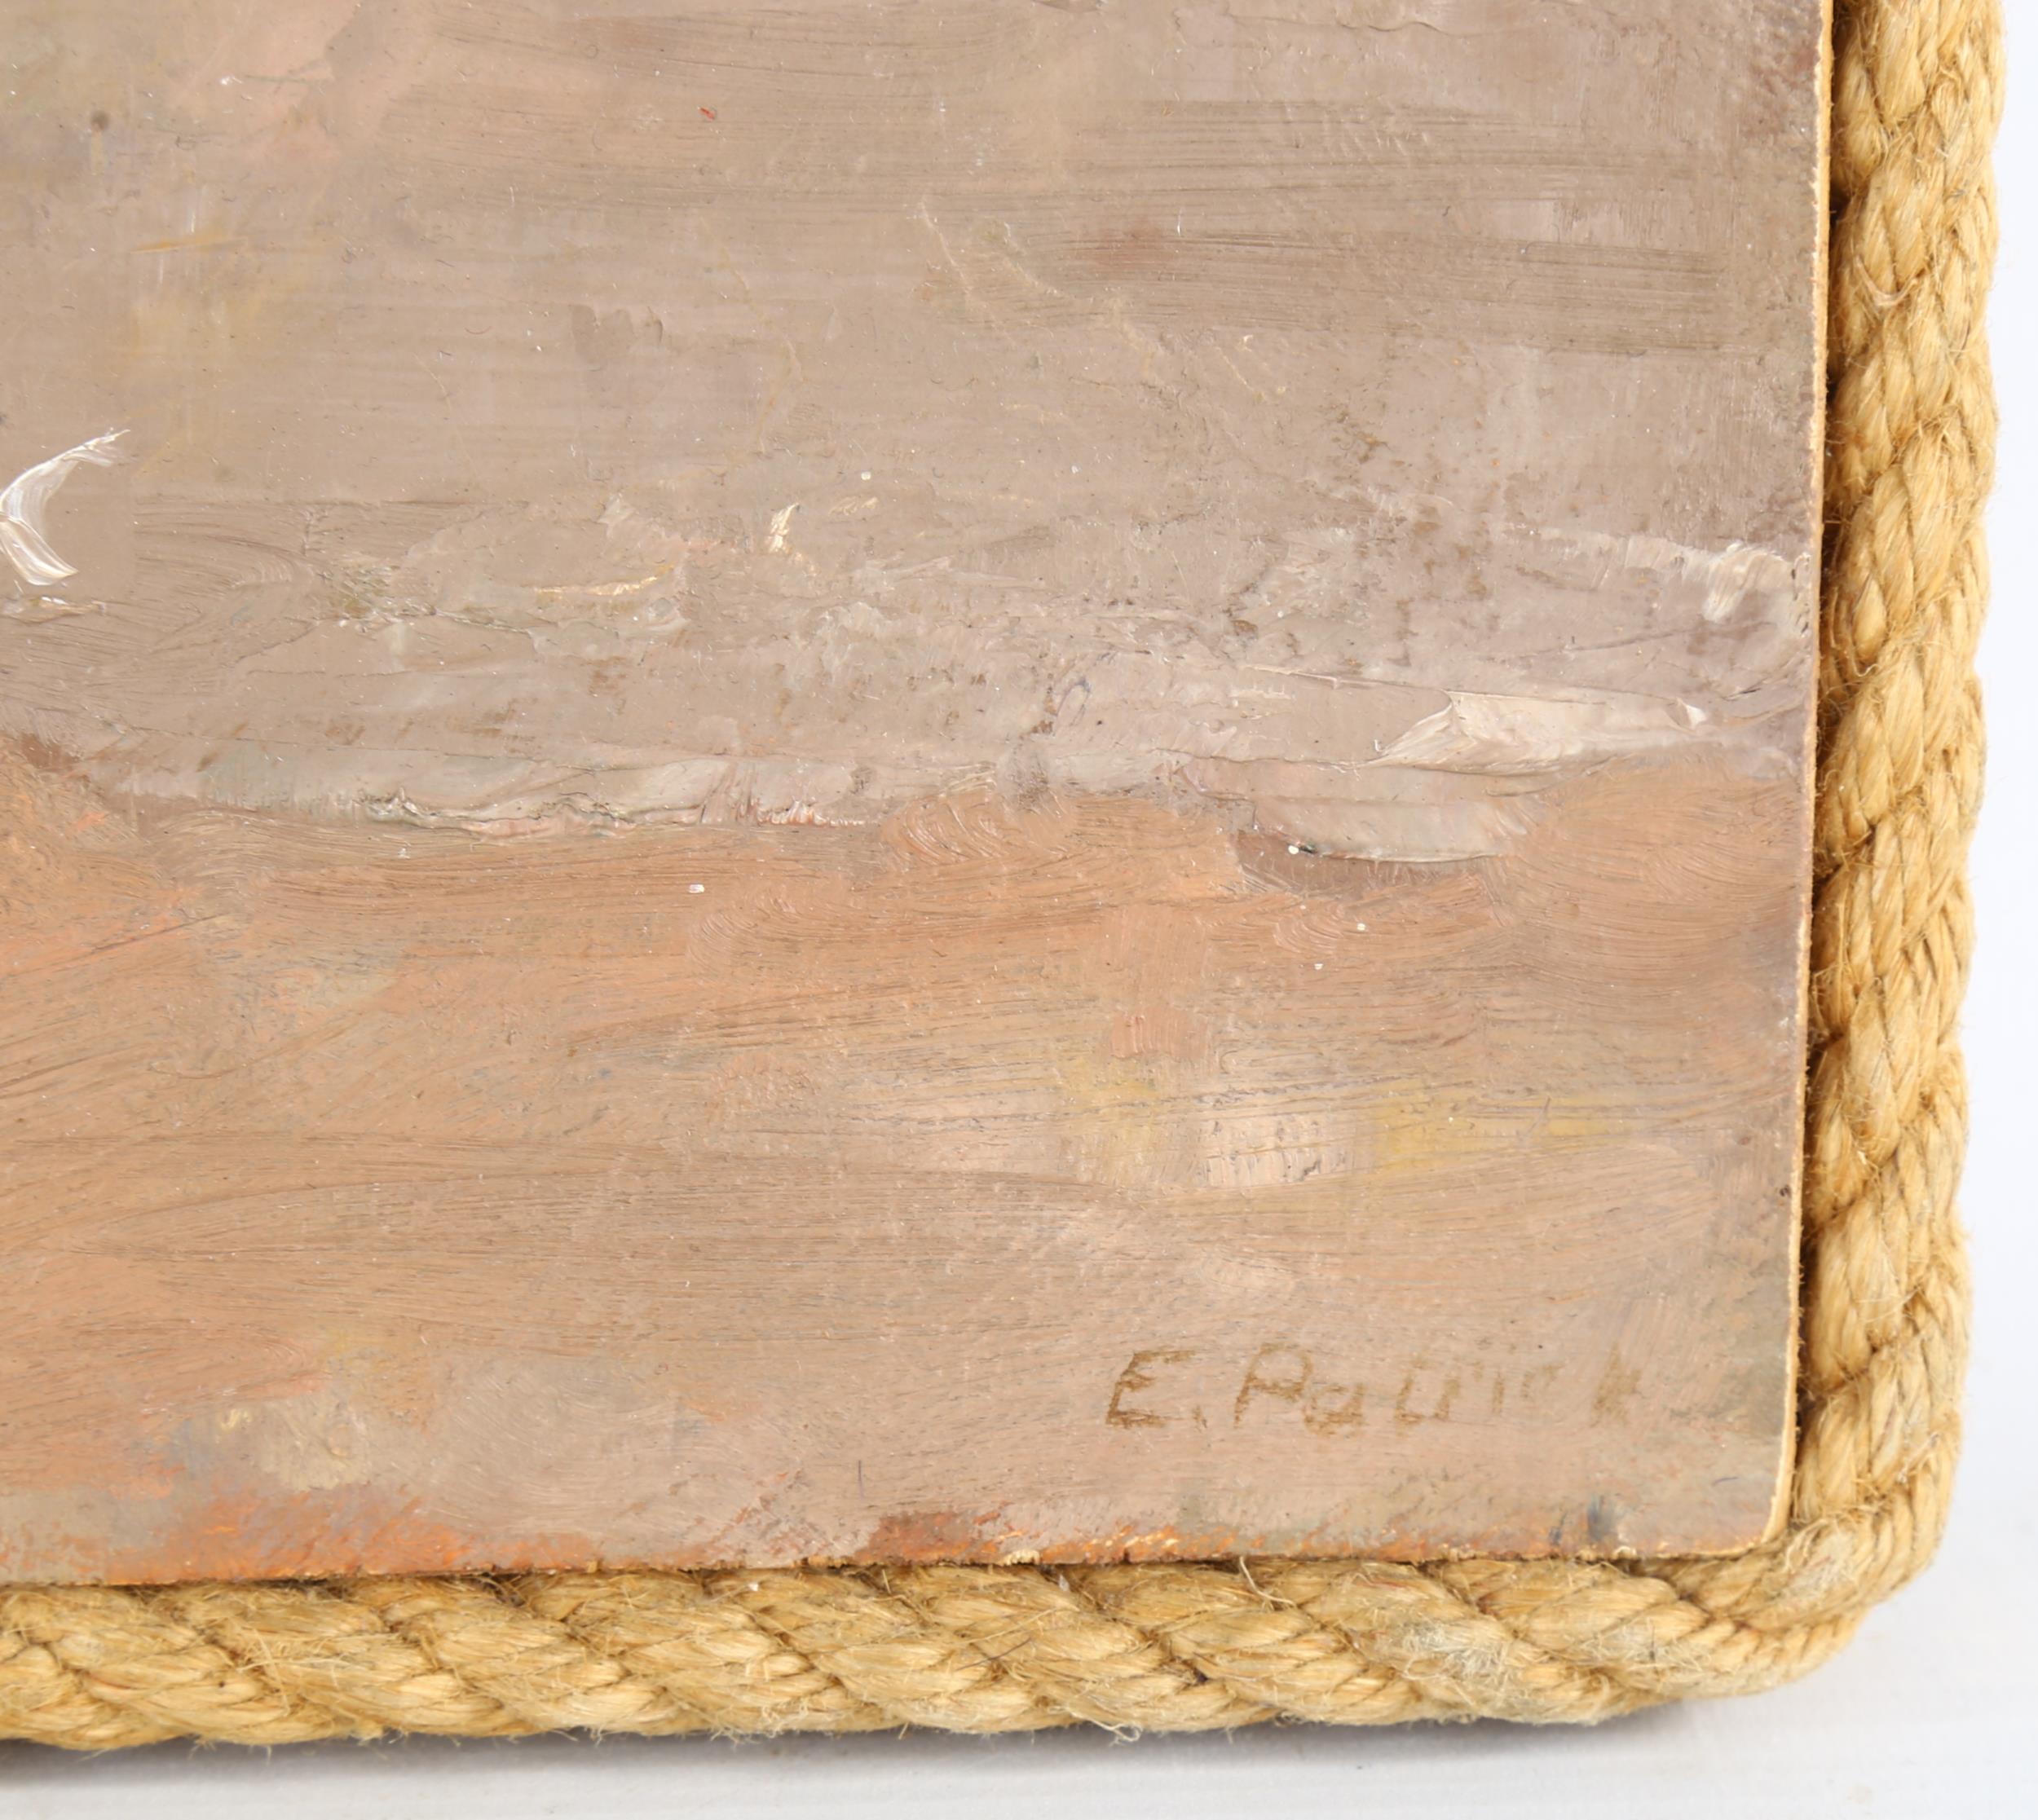 Emily Patrick (born 1959), The Thames Estuary, oil on board, signed, 30cm x 25cm, rope frame, - Image 2 of 4